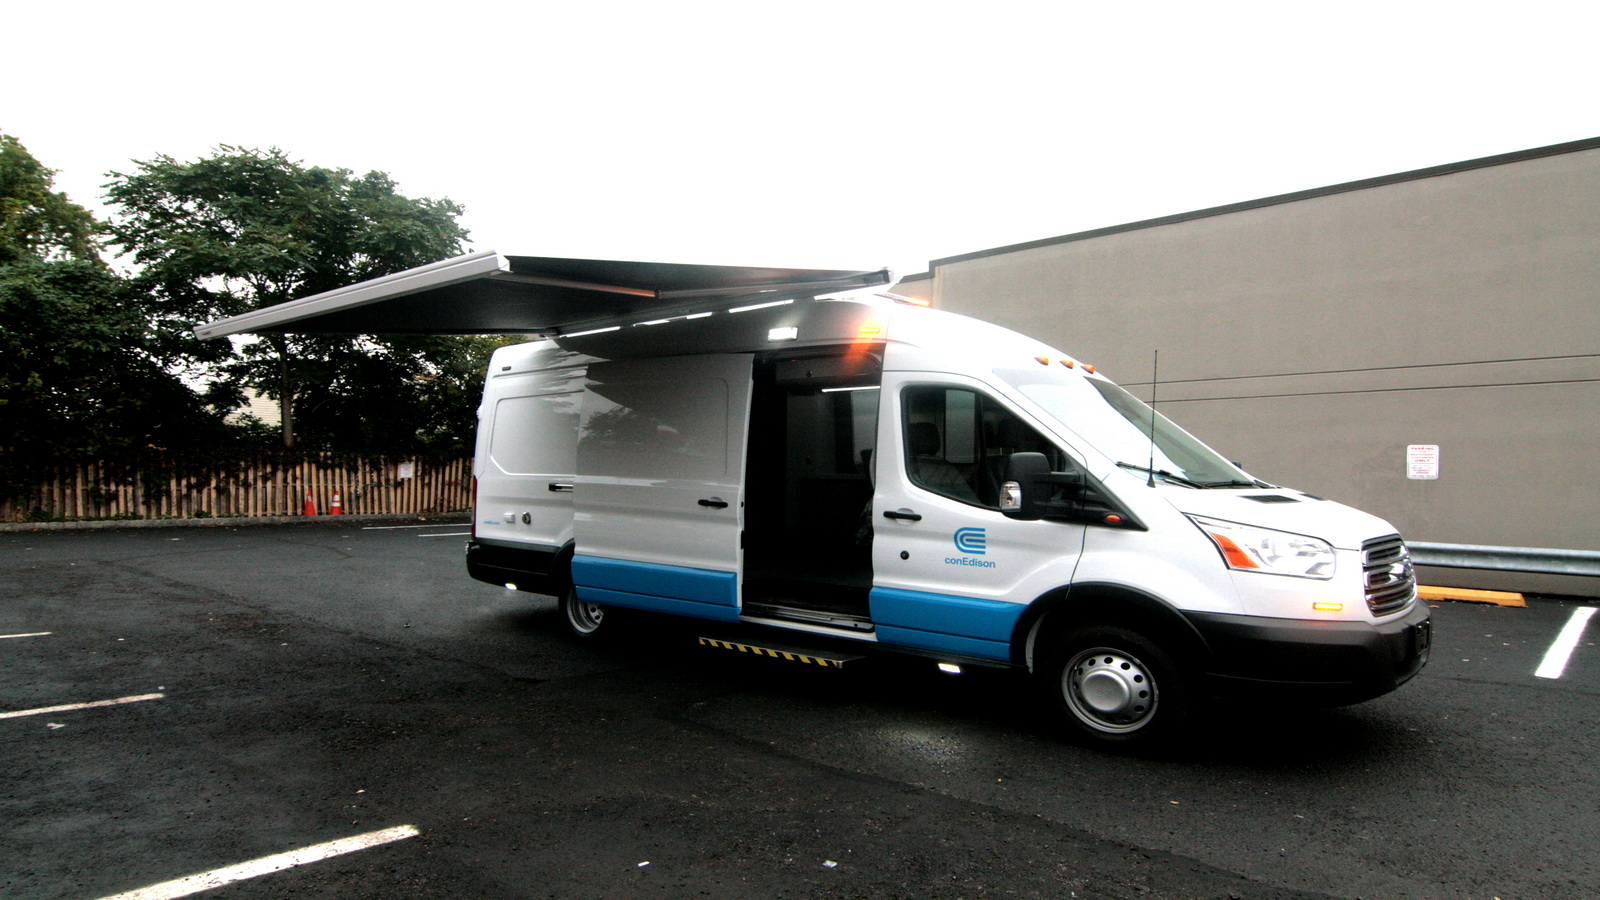 mobile office vans for sale